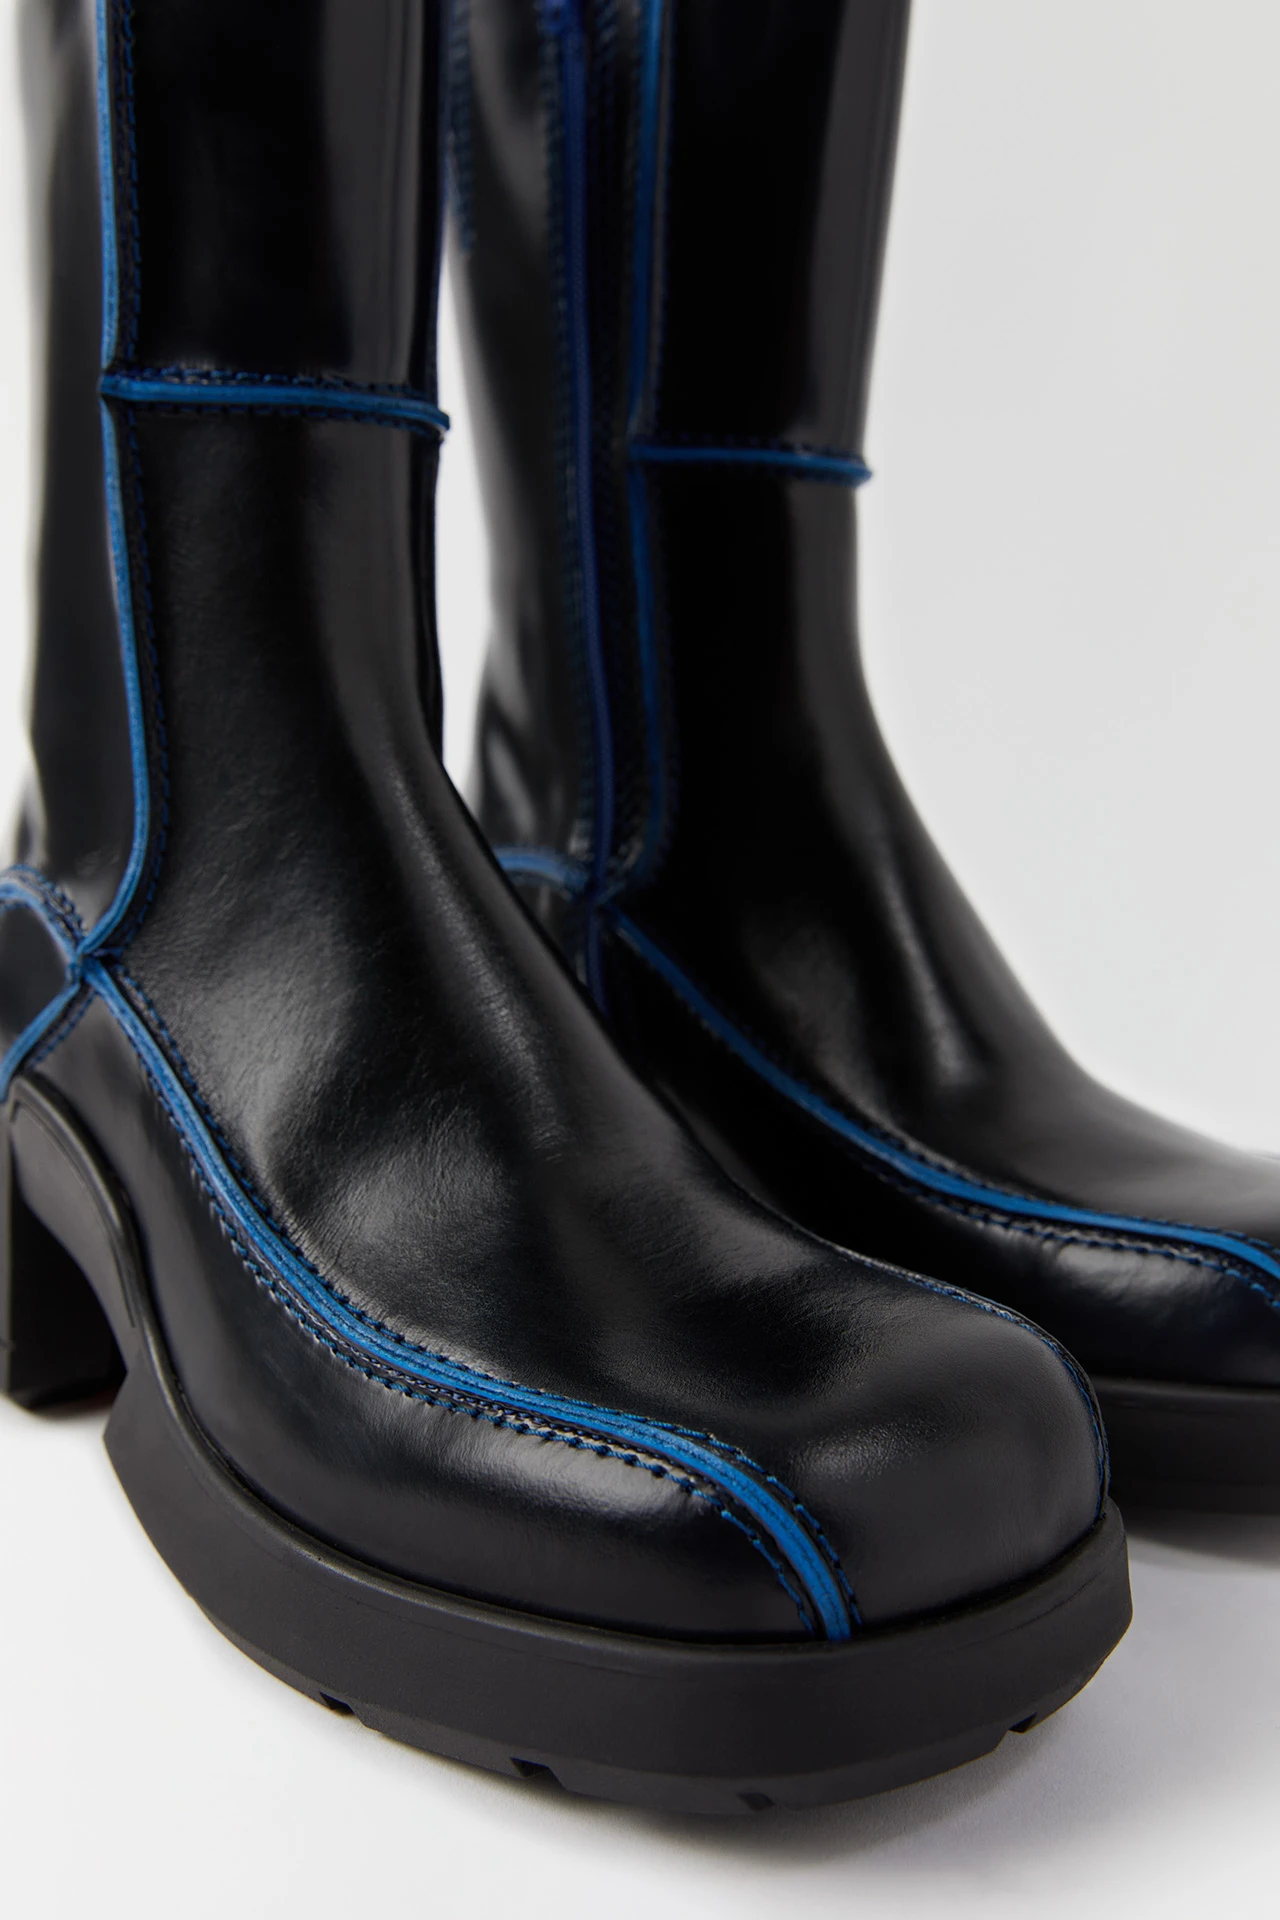 e8-meiko-black-blue-boots-03